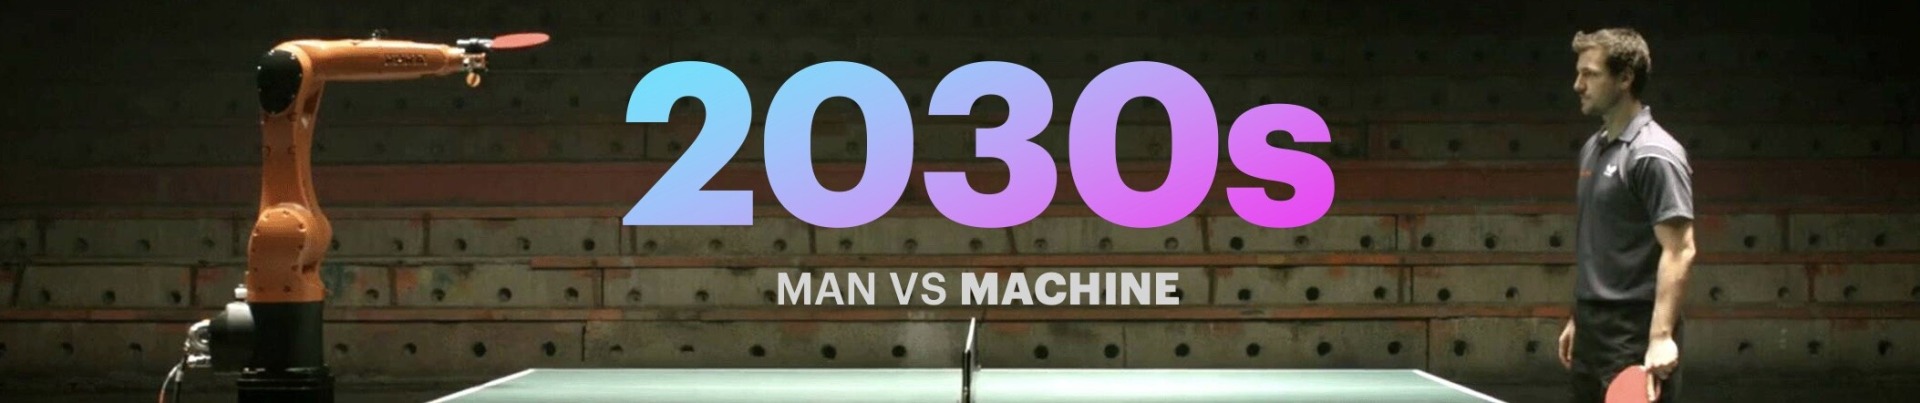 2030s_Man_vs_Machine.jpeg